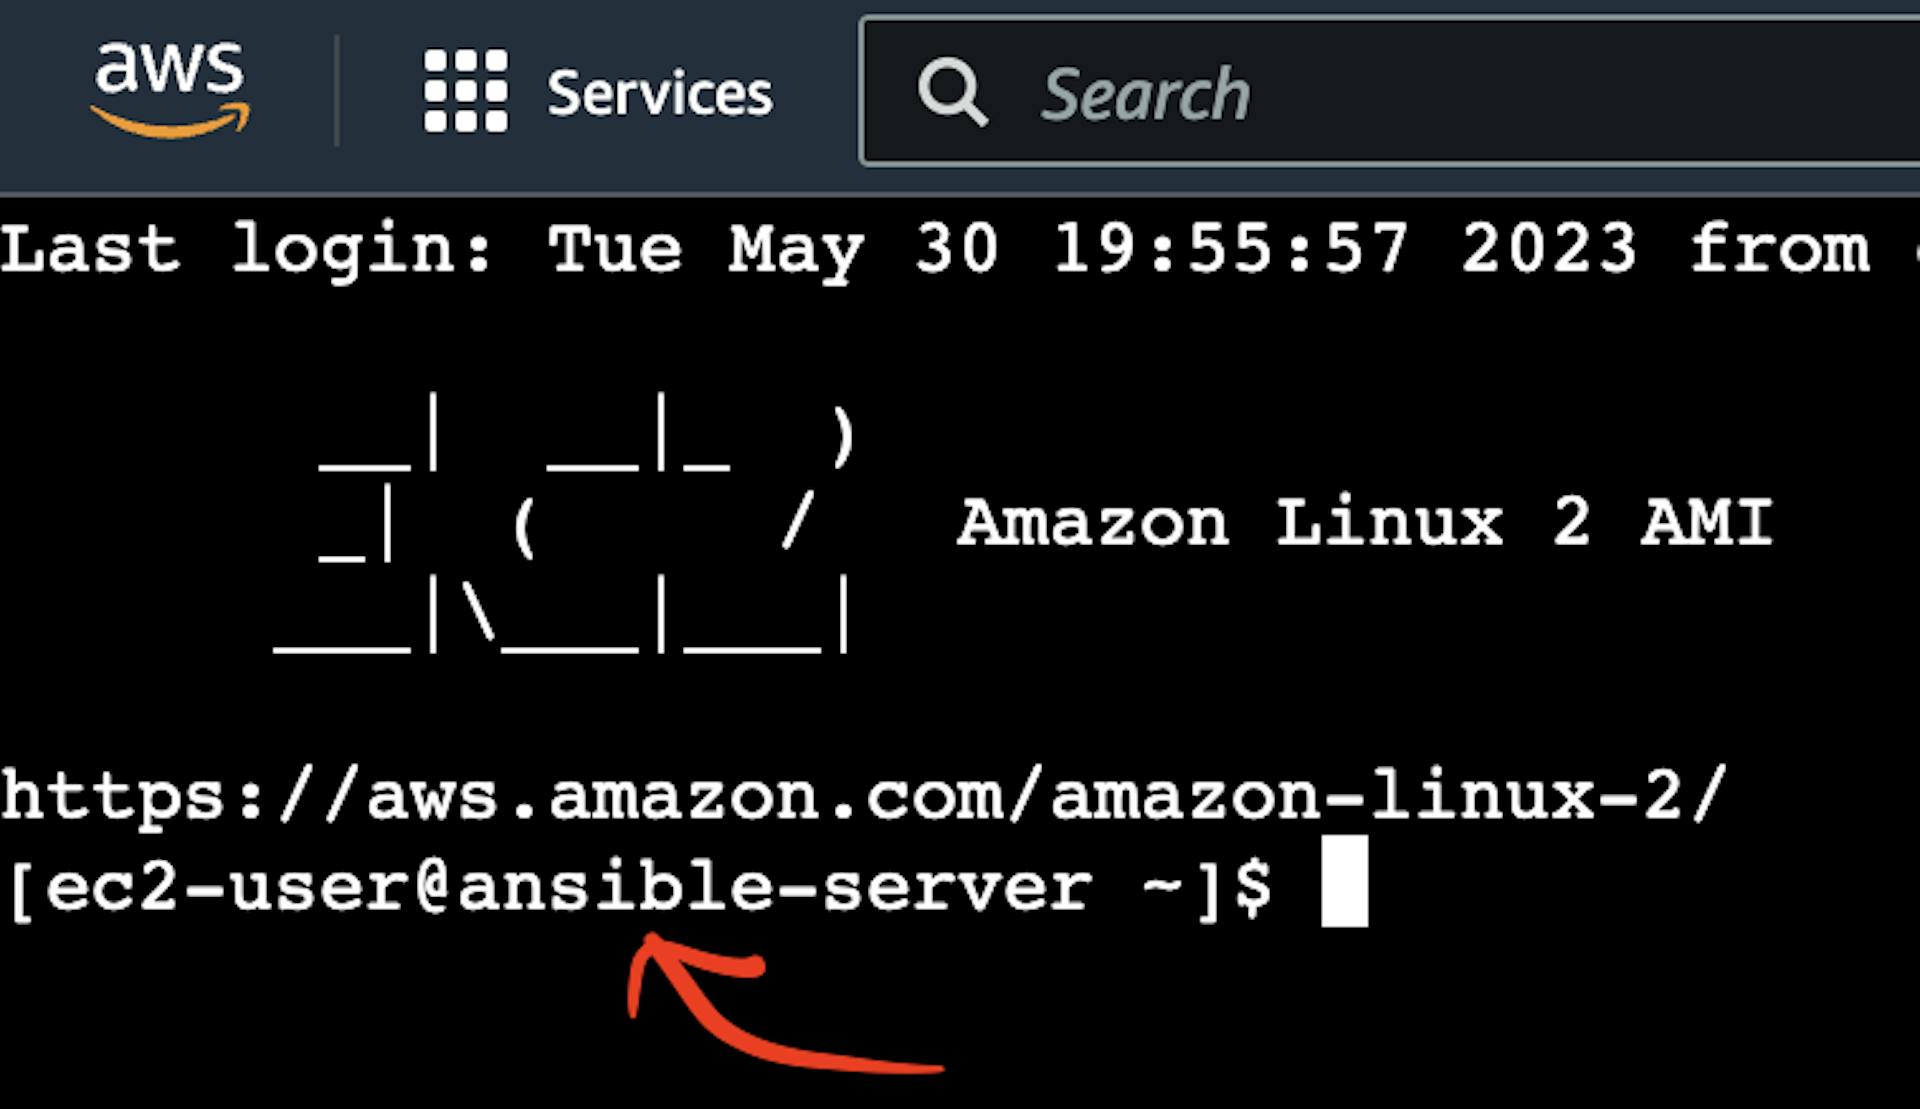 La captura de pantalla del terminal de instancia del servidor virtual AWS EC2 con el puntero al nombre de host